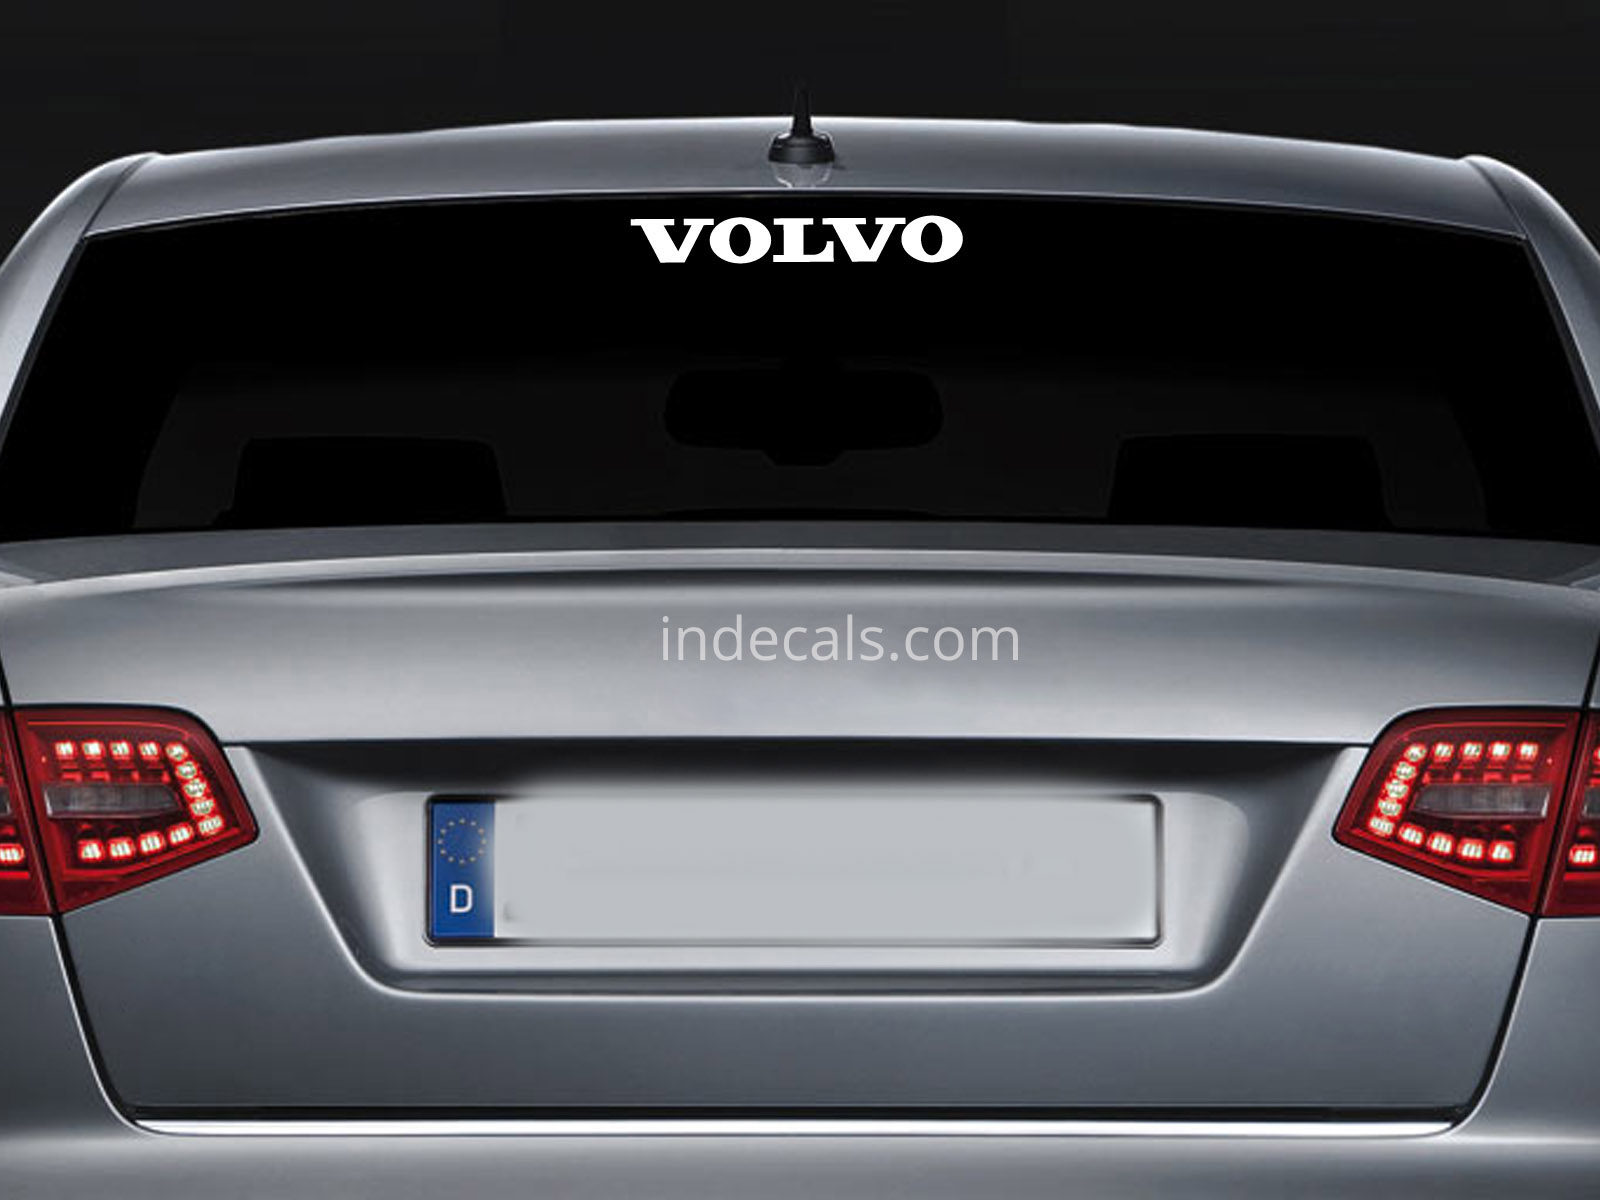 1 x Volvo Sticker for Windshield or Back Window - White